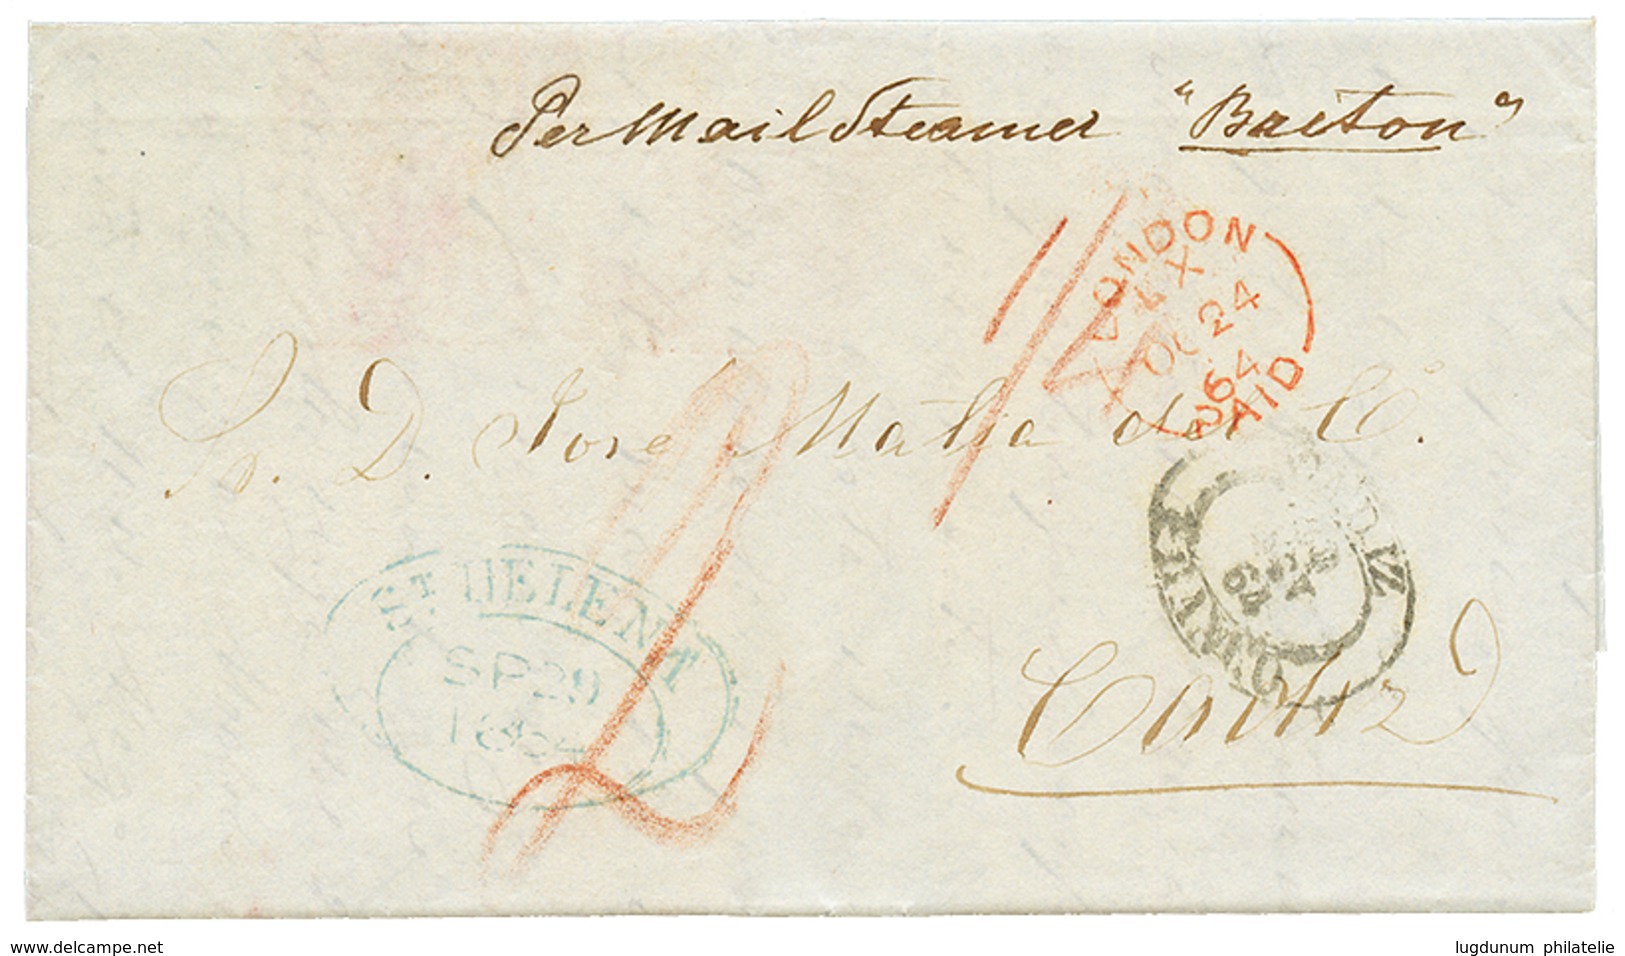 748 STE HELENA To SPAIN : 1864 Oval Datestamp ST HELENA In Blue + "1/4" Tax Marking + LONDON + CADIZ FRANCO On Entire Le - St. Helena